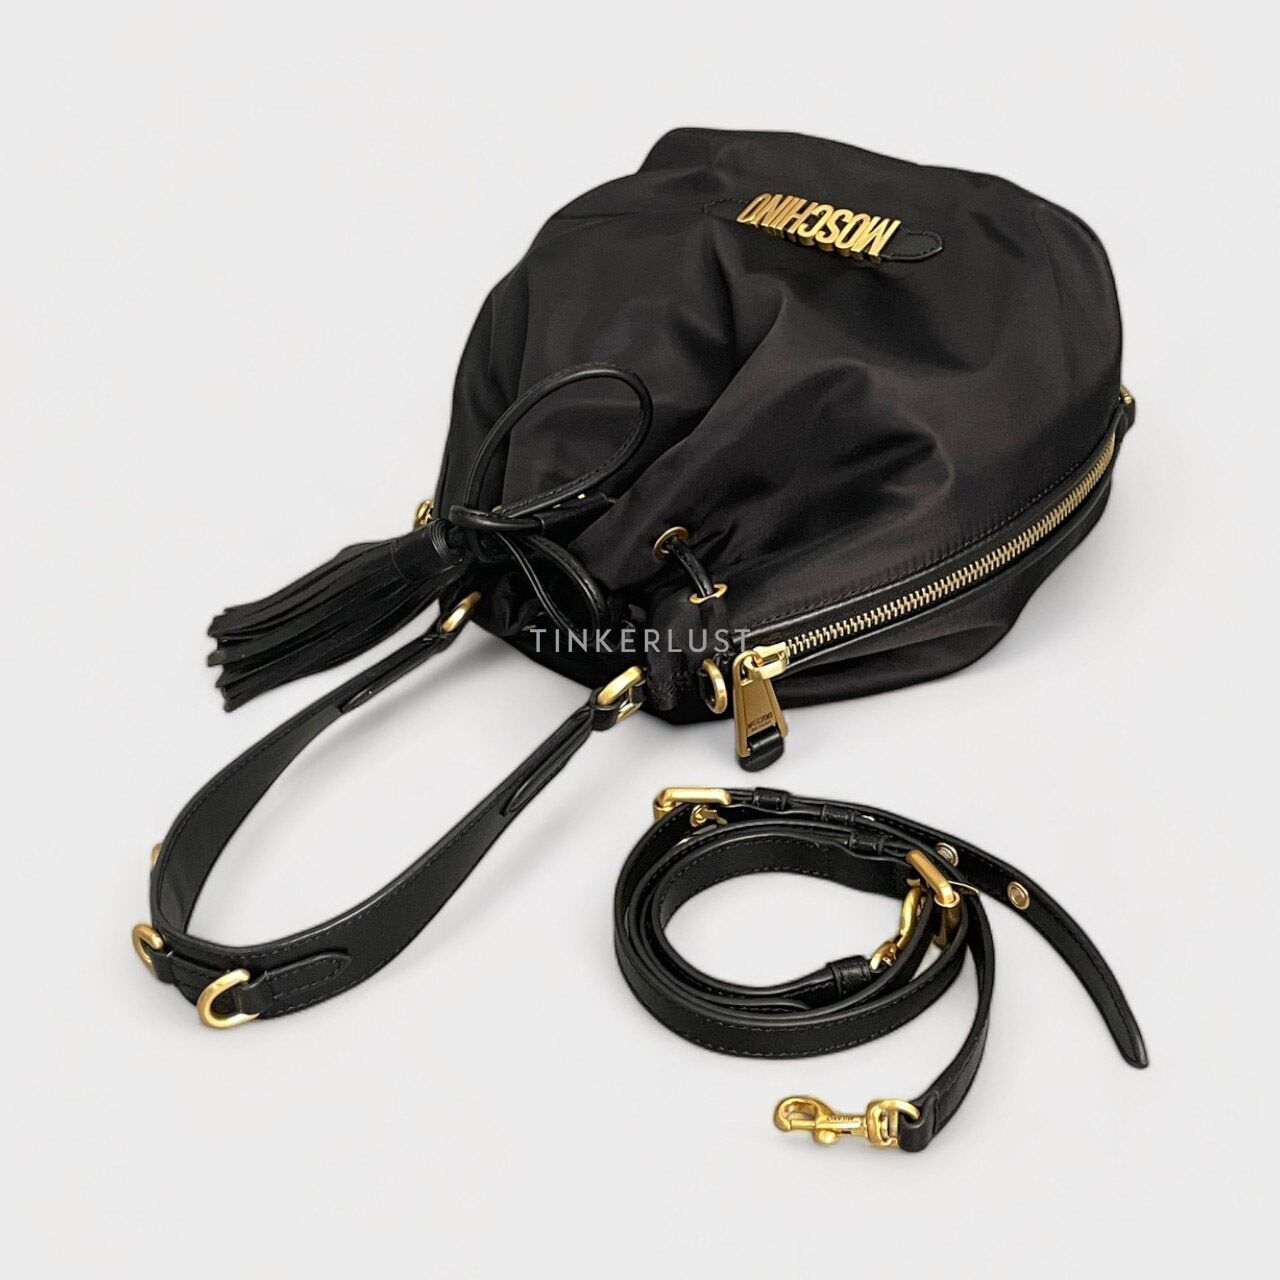 Moschino Black Bucket Bag